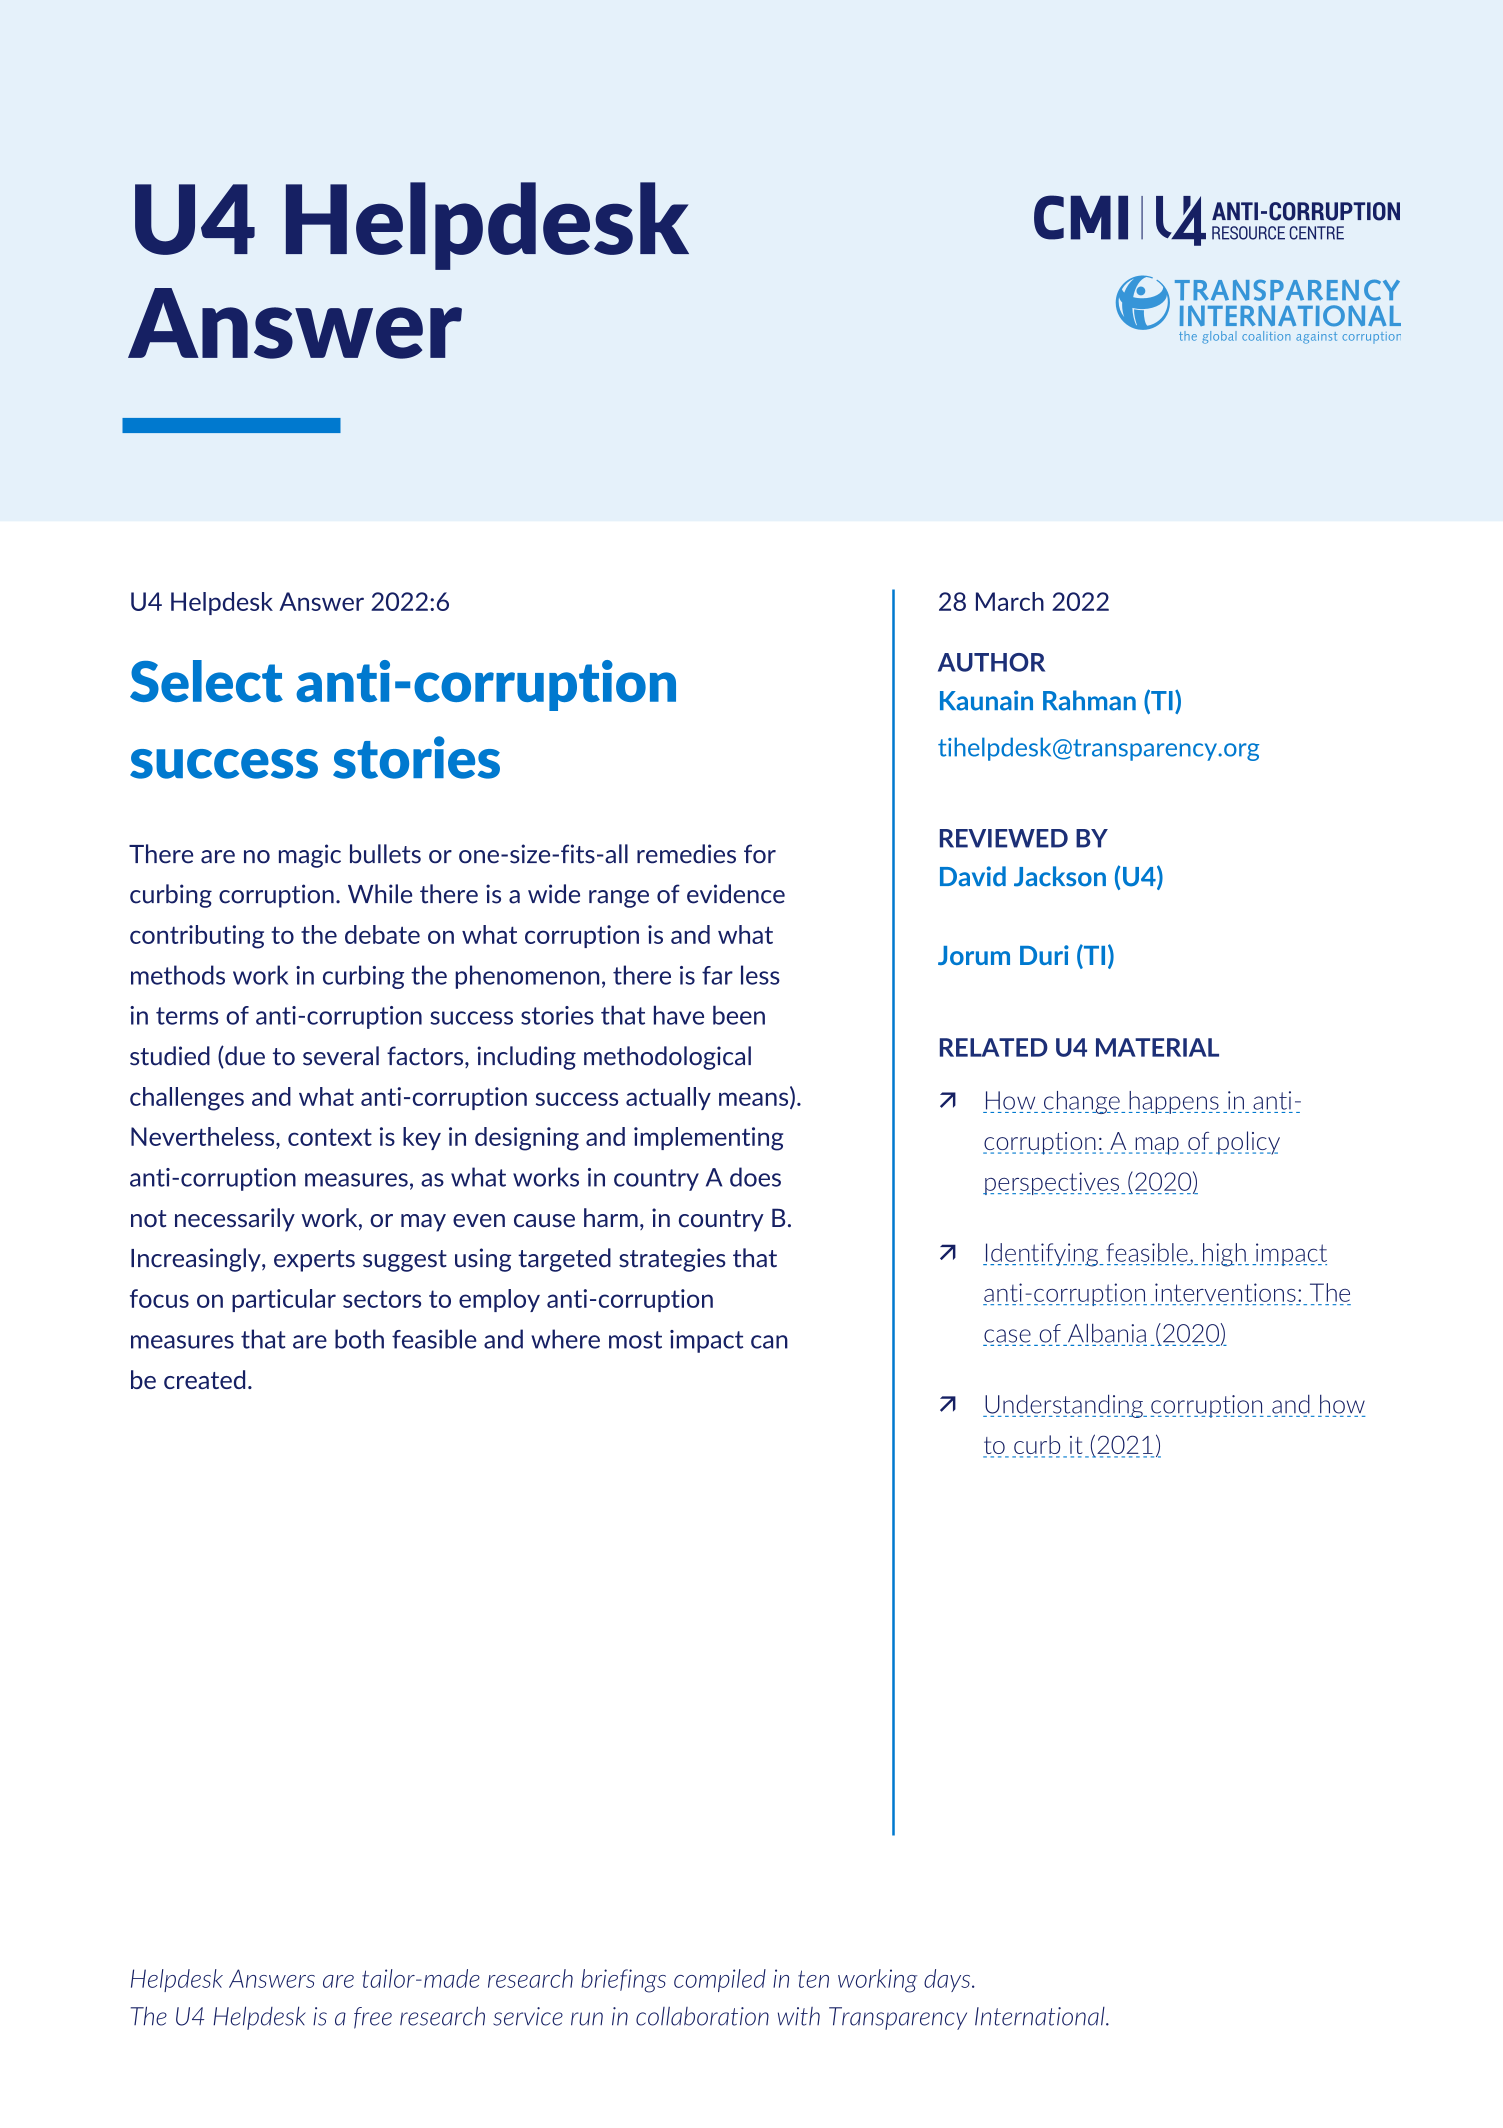 Select anti-corruption success stories